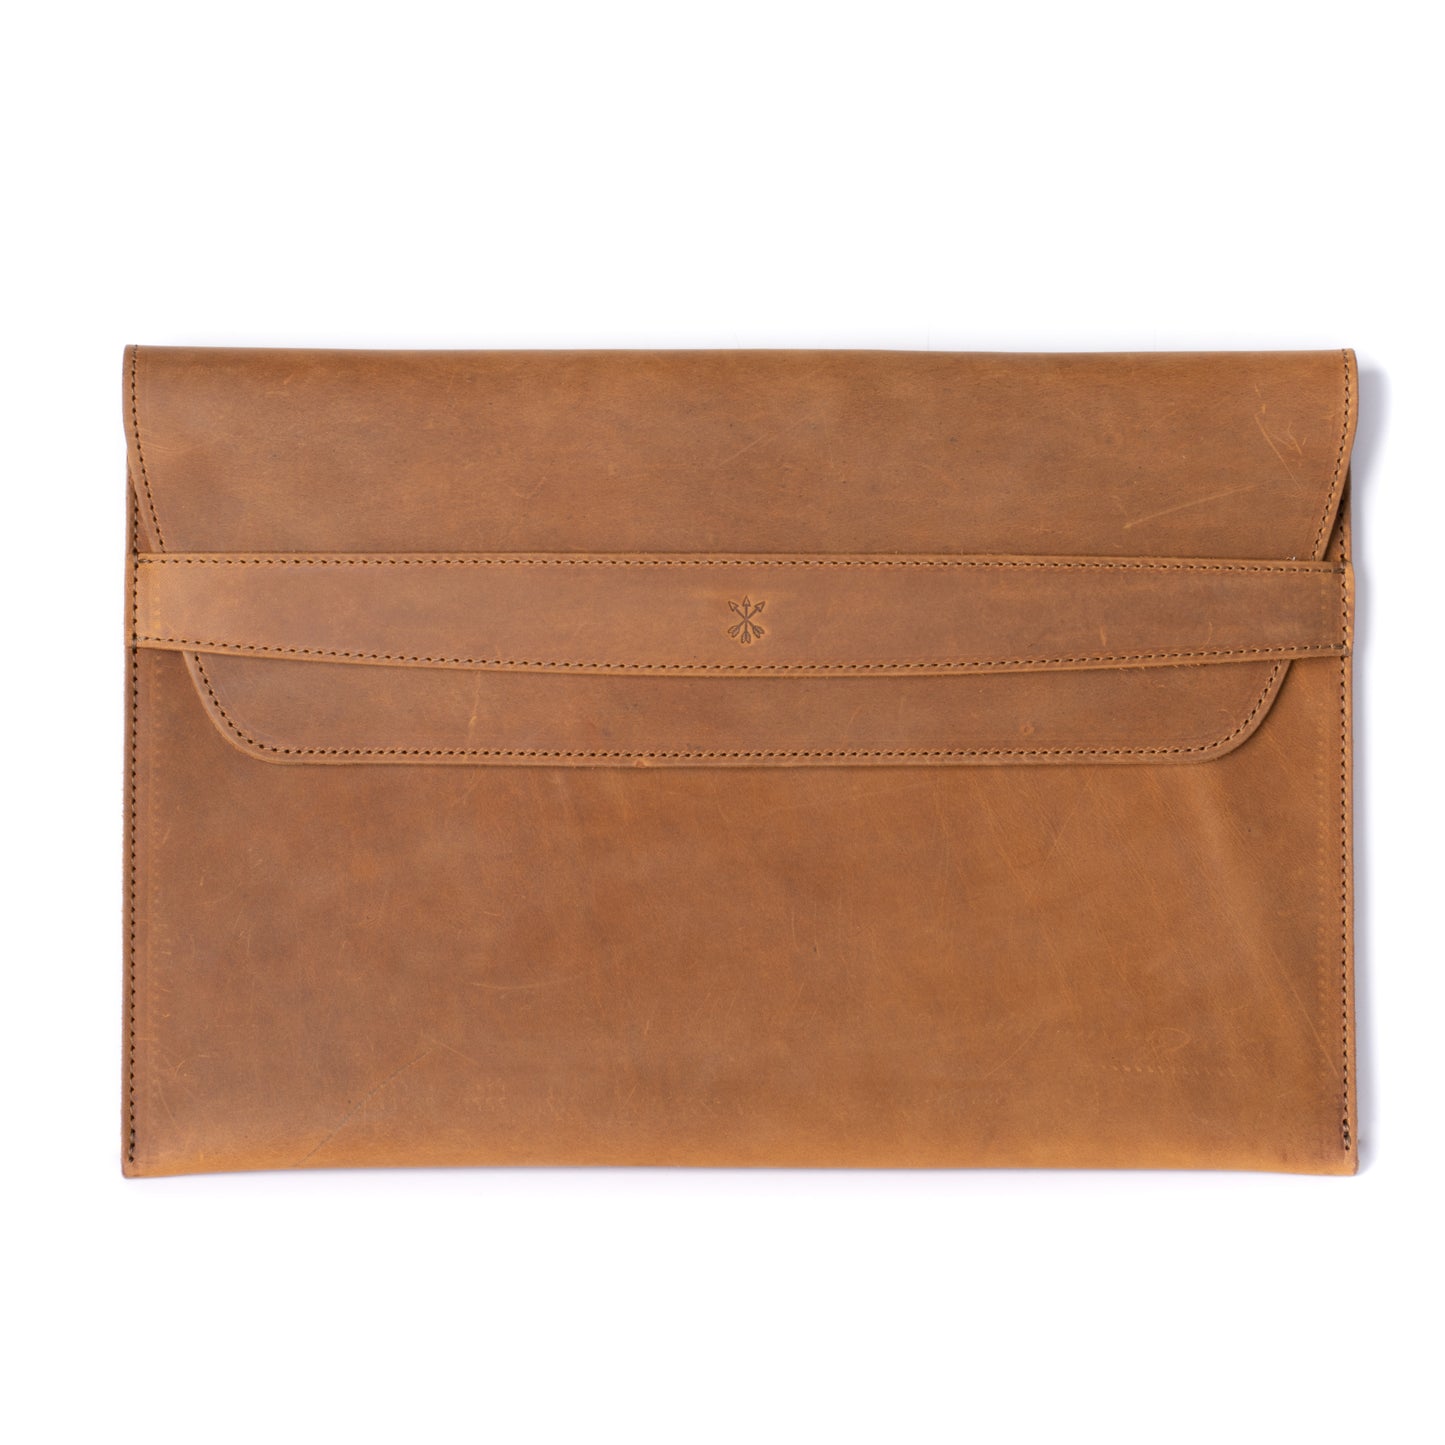 Leather MacBook Envelope Case - Tobacco